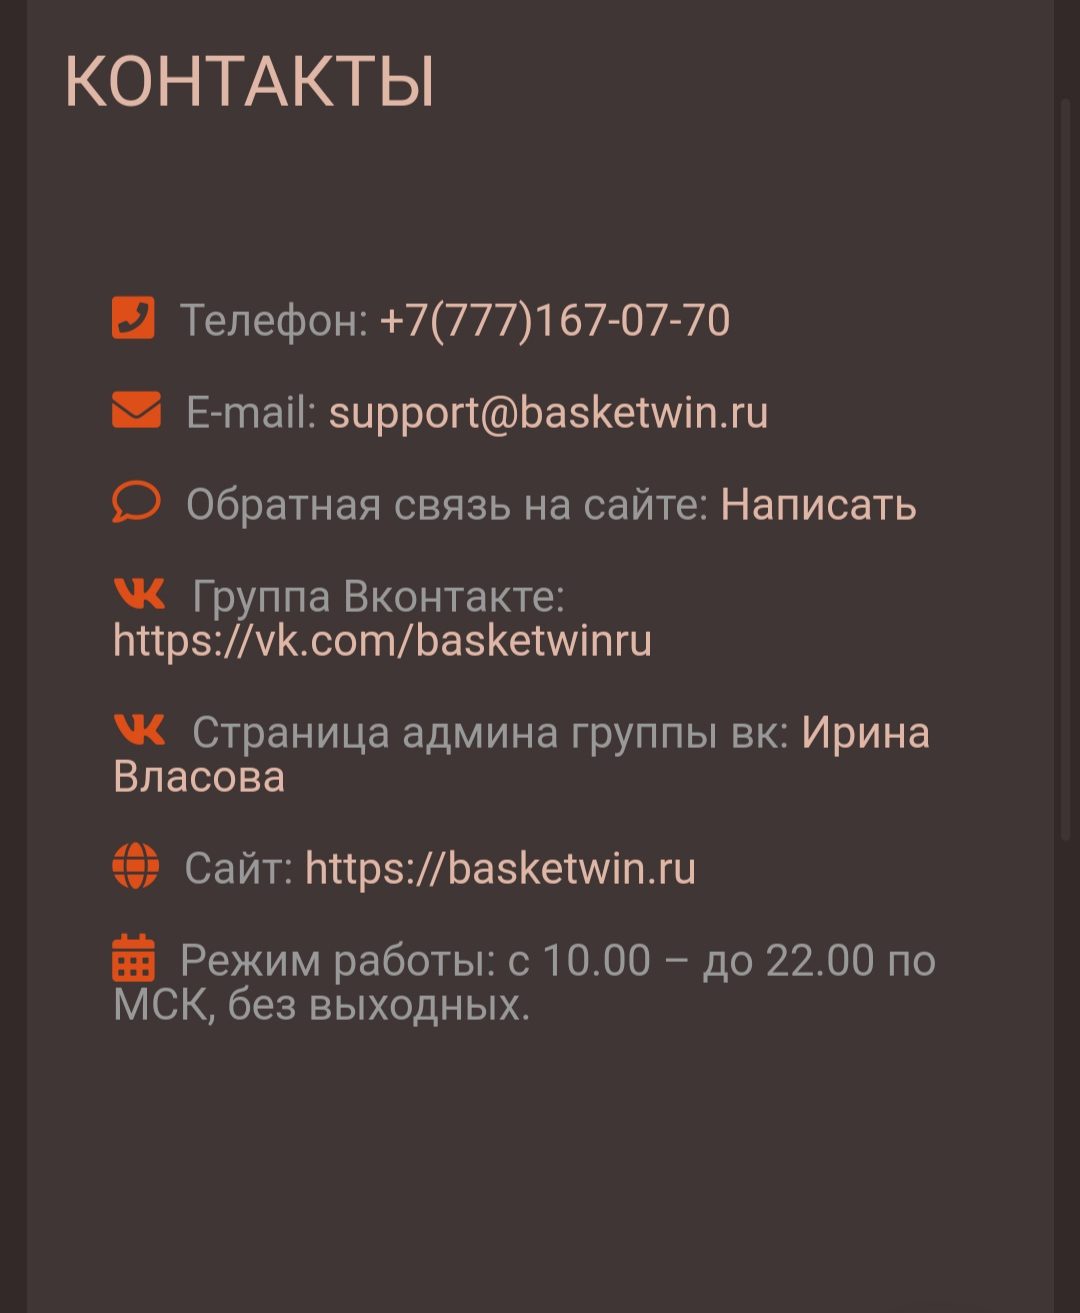 Basketwin.ru - контакты